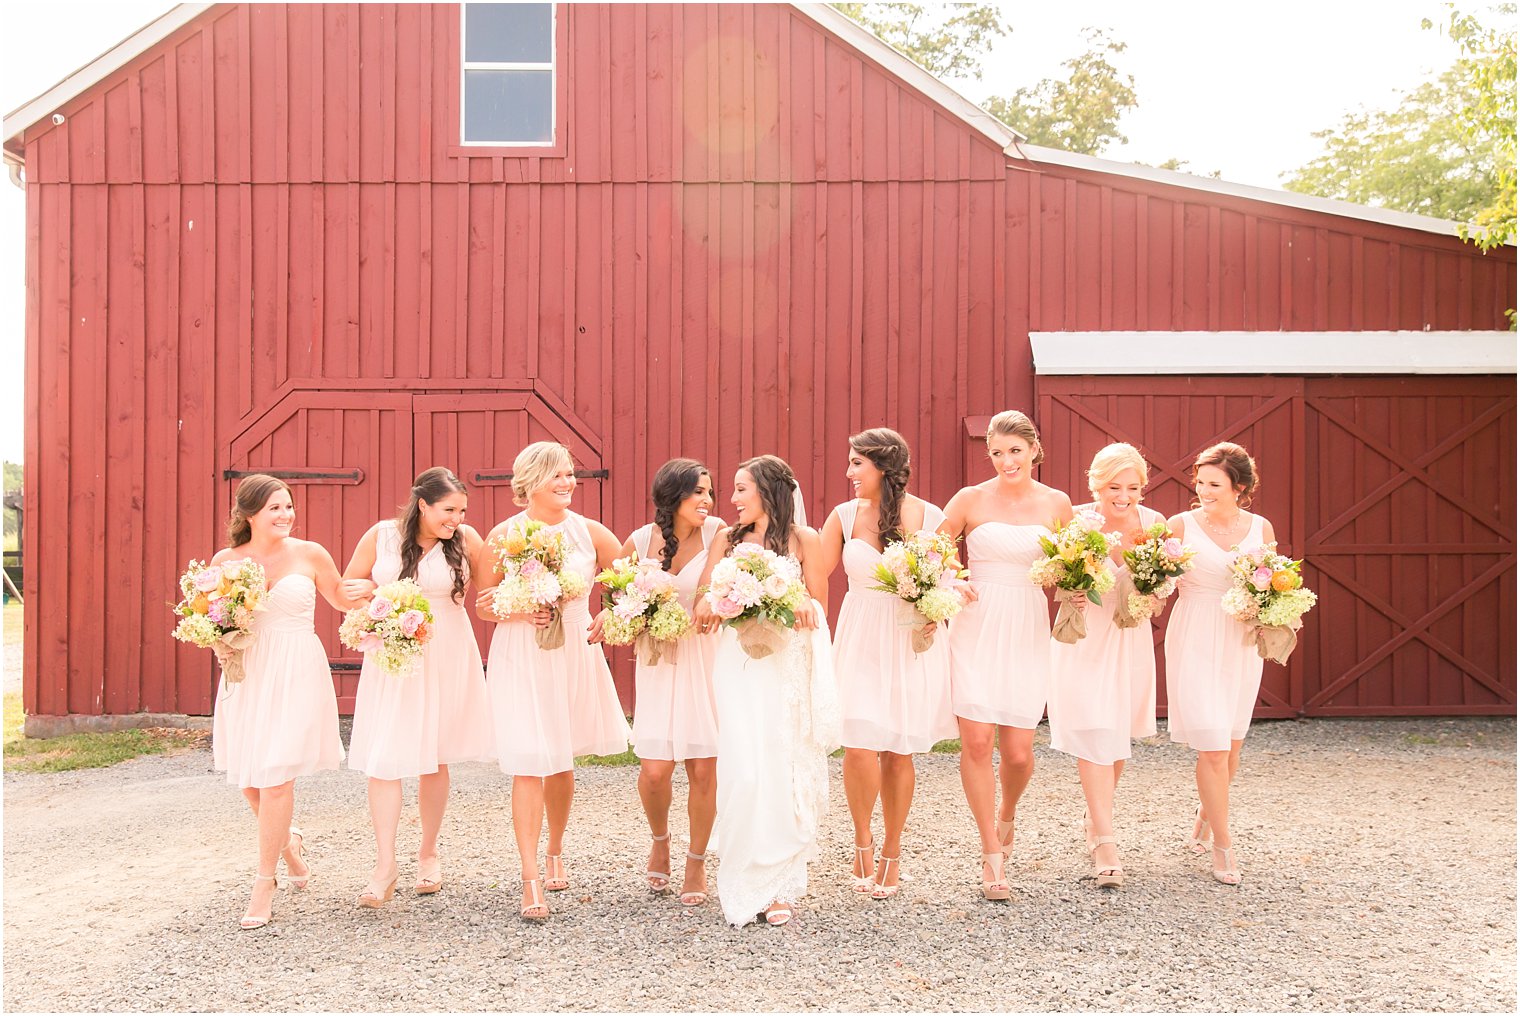 Bridesmaids in pink Bill Levkoff dresses